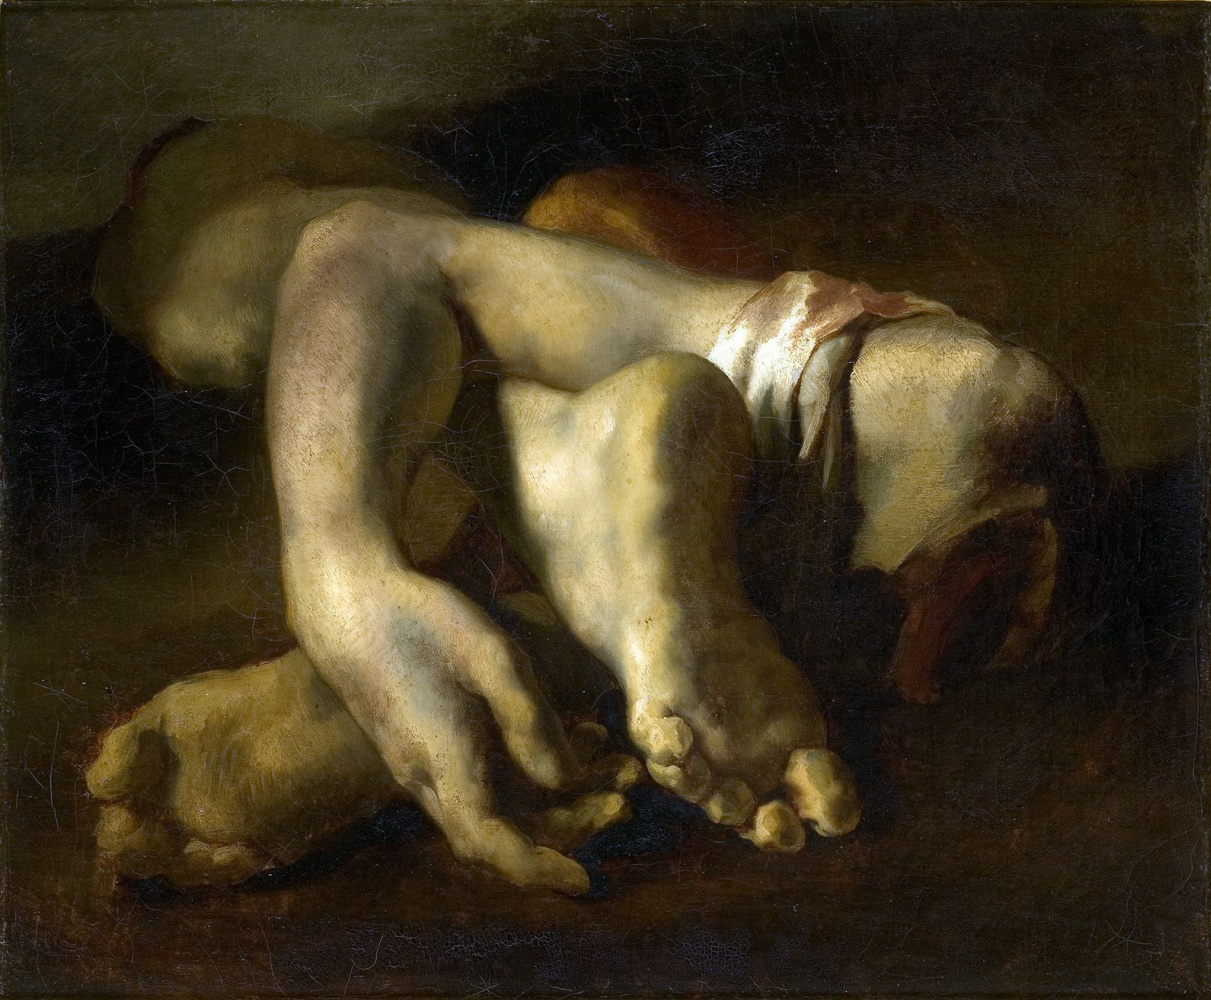 Théodore Géricault. Arms and legs. Anatomical study